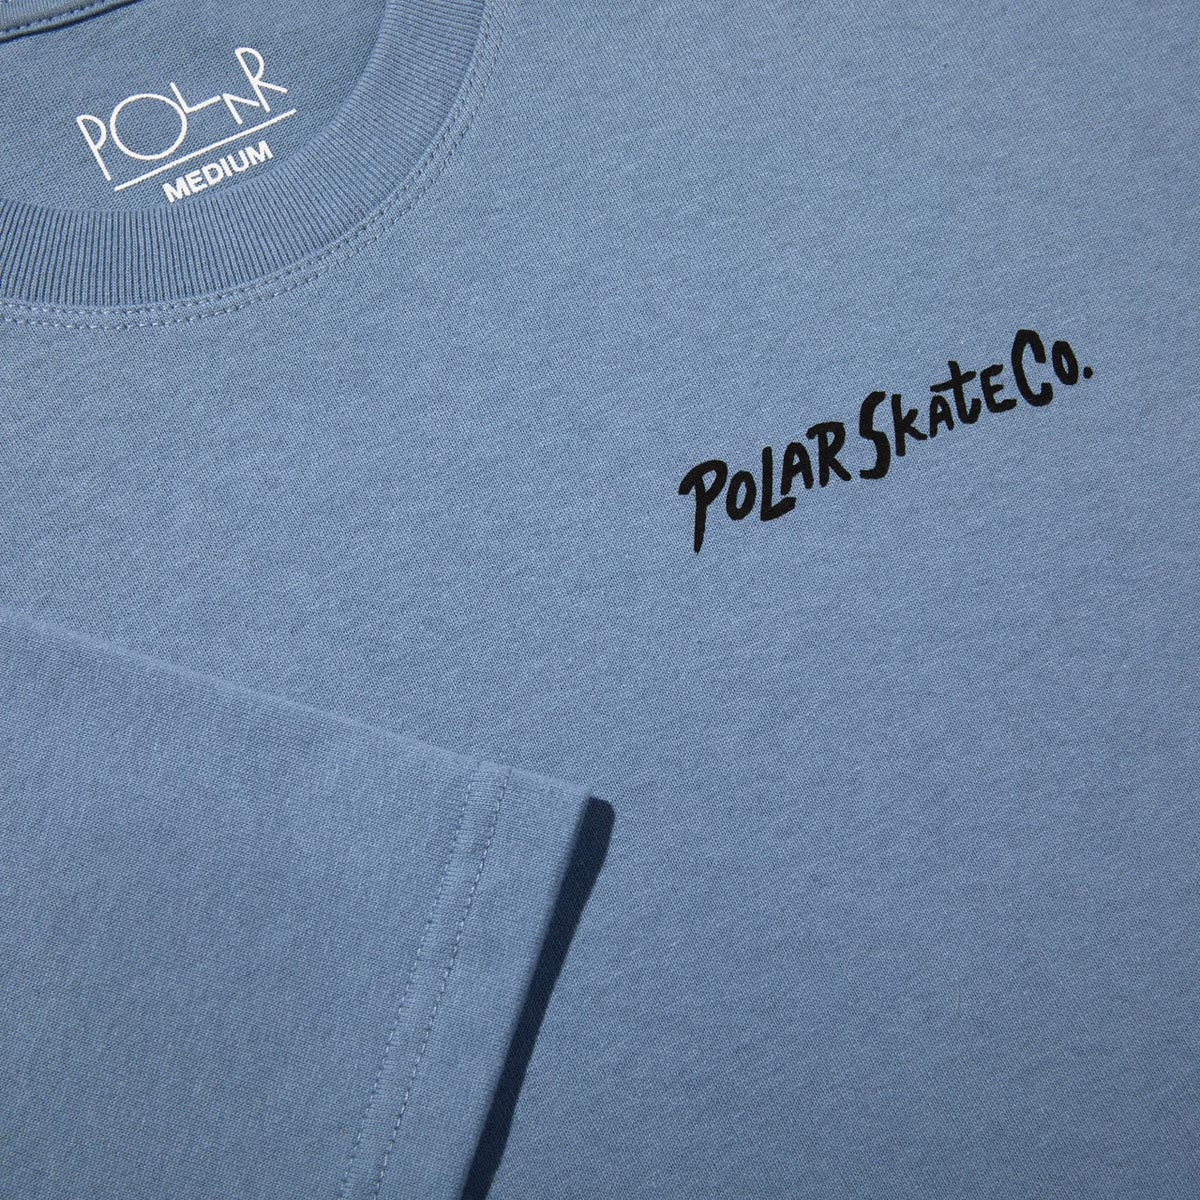 Polar Yoga Trippin' T-Shirt - Oxford Blue image 4